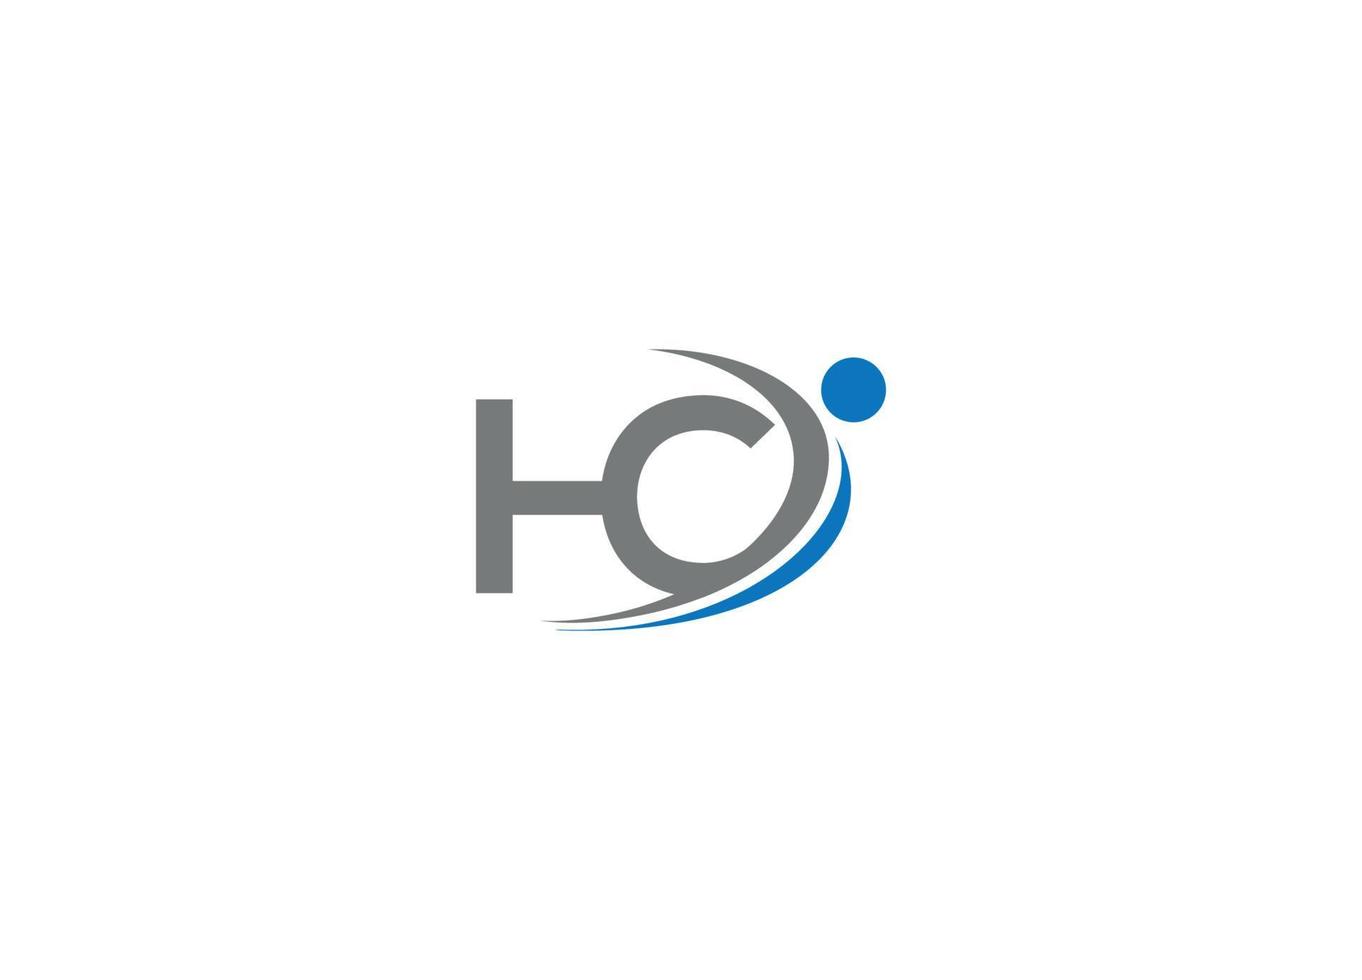 hc letter initial creative modern logo design vector icon template